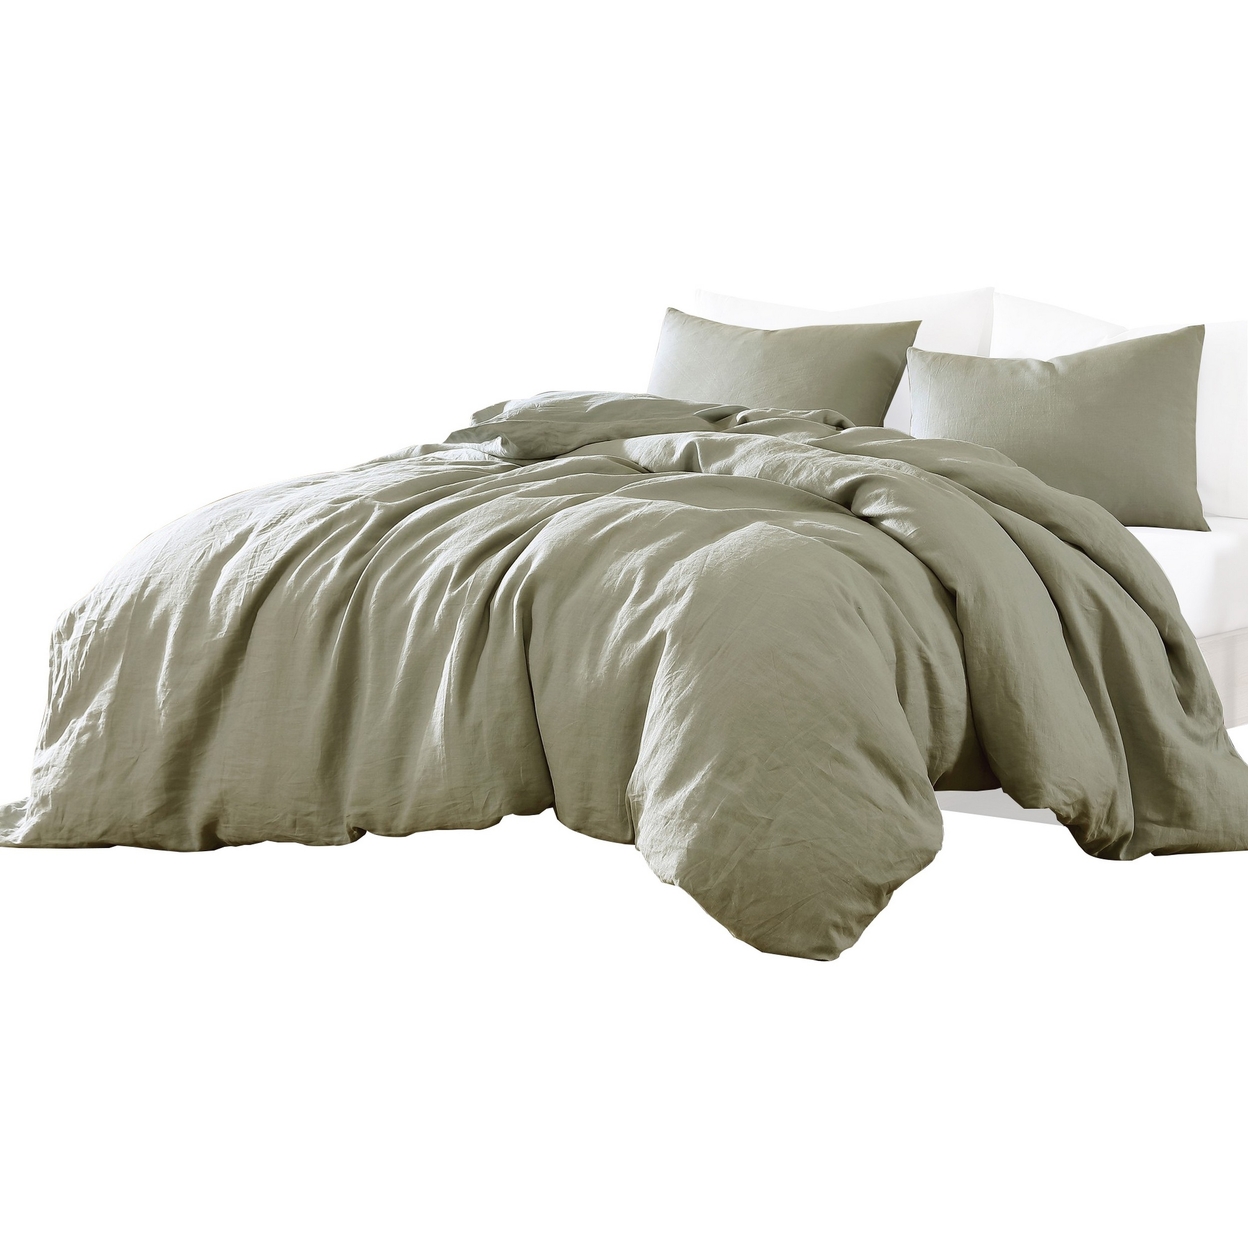 Edge 4 Piece Queen Size Duvet Comforter Set, Washed Linen, Sage Green - Saltoro Sherpi